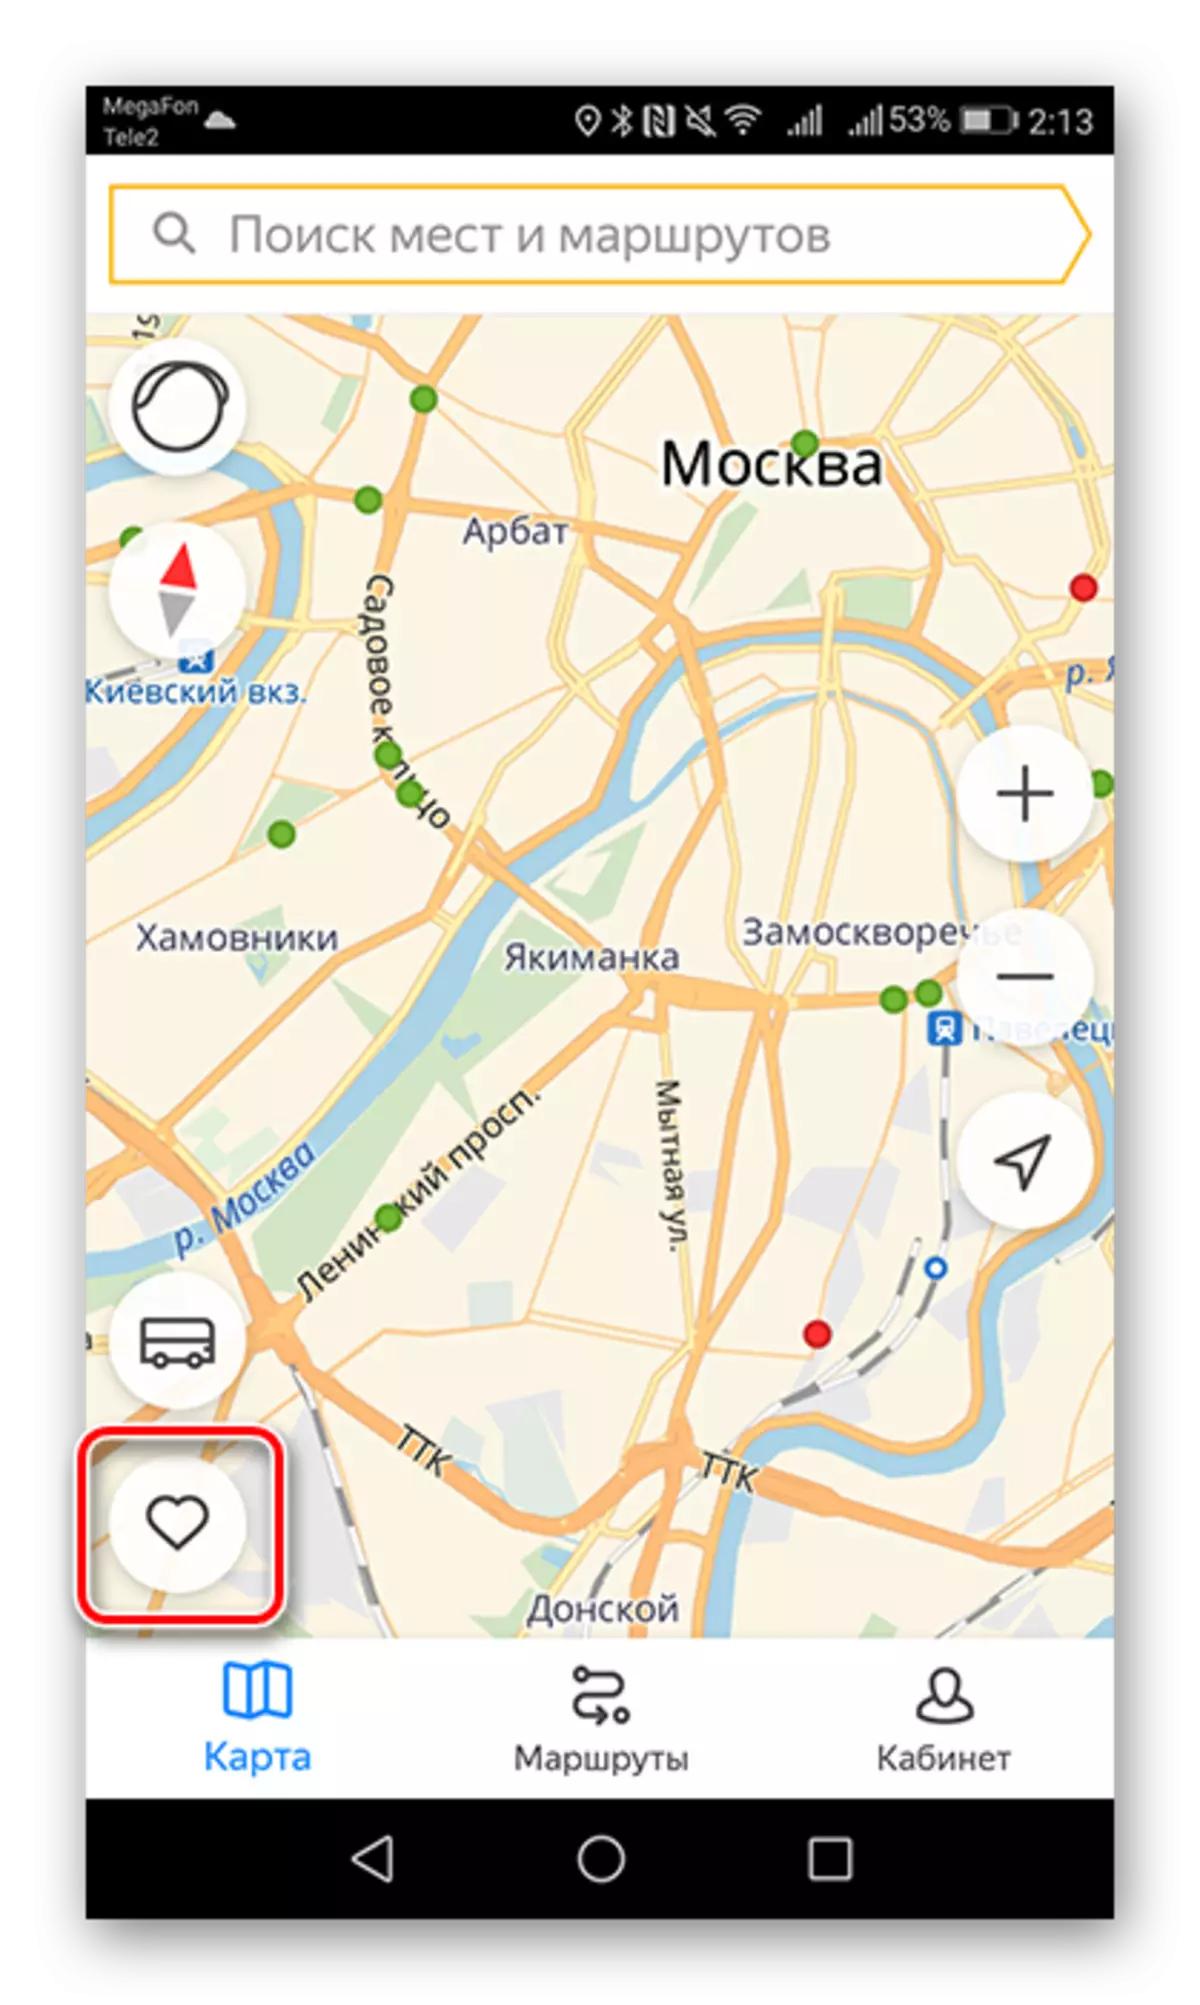 Chuyển sang tab Favorites trong ứng dụng Yandex.Transport